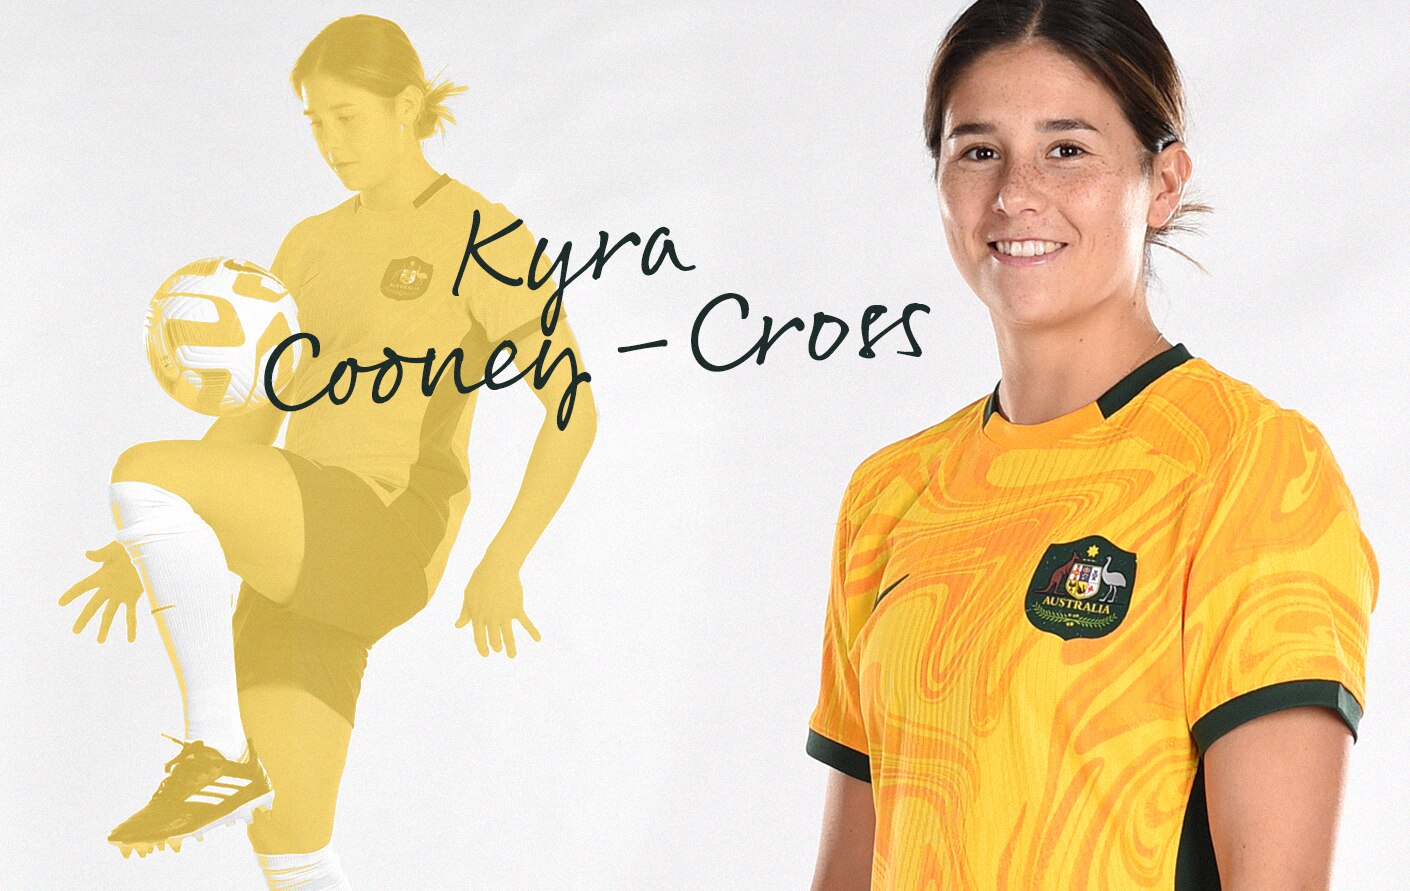 Kyra Cooney-Cross